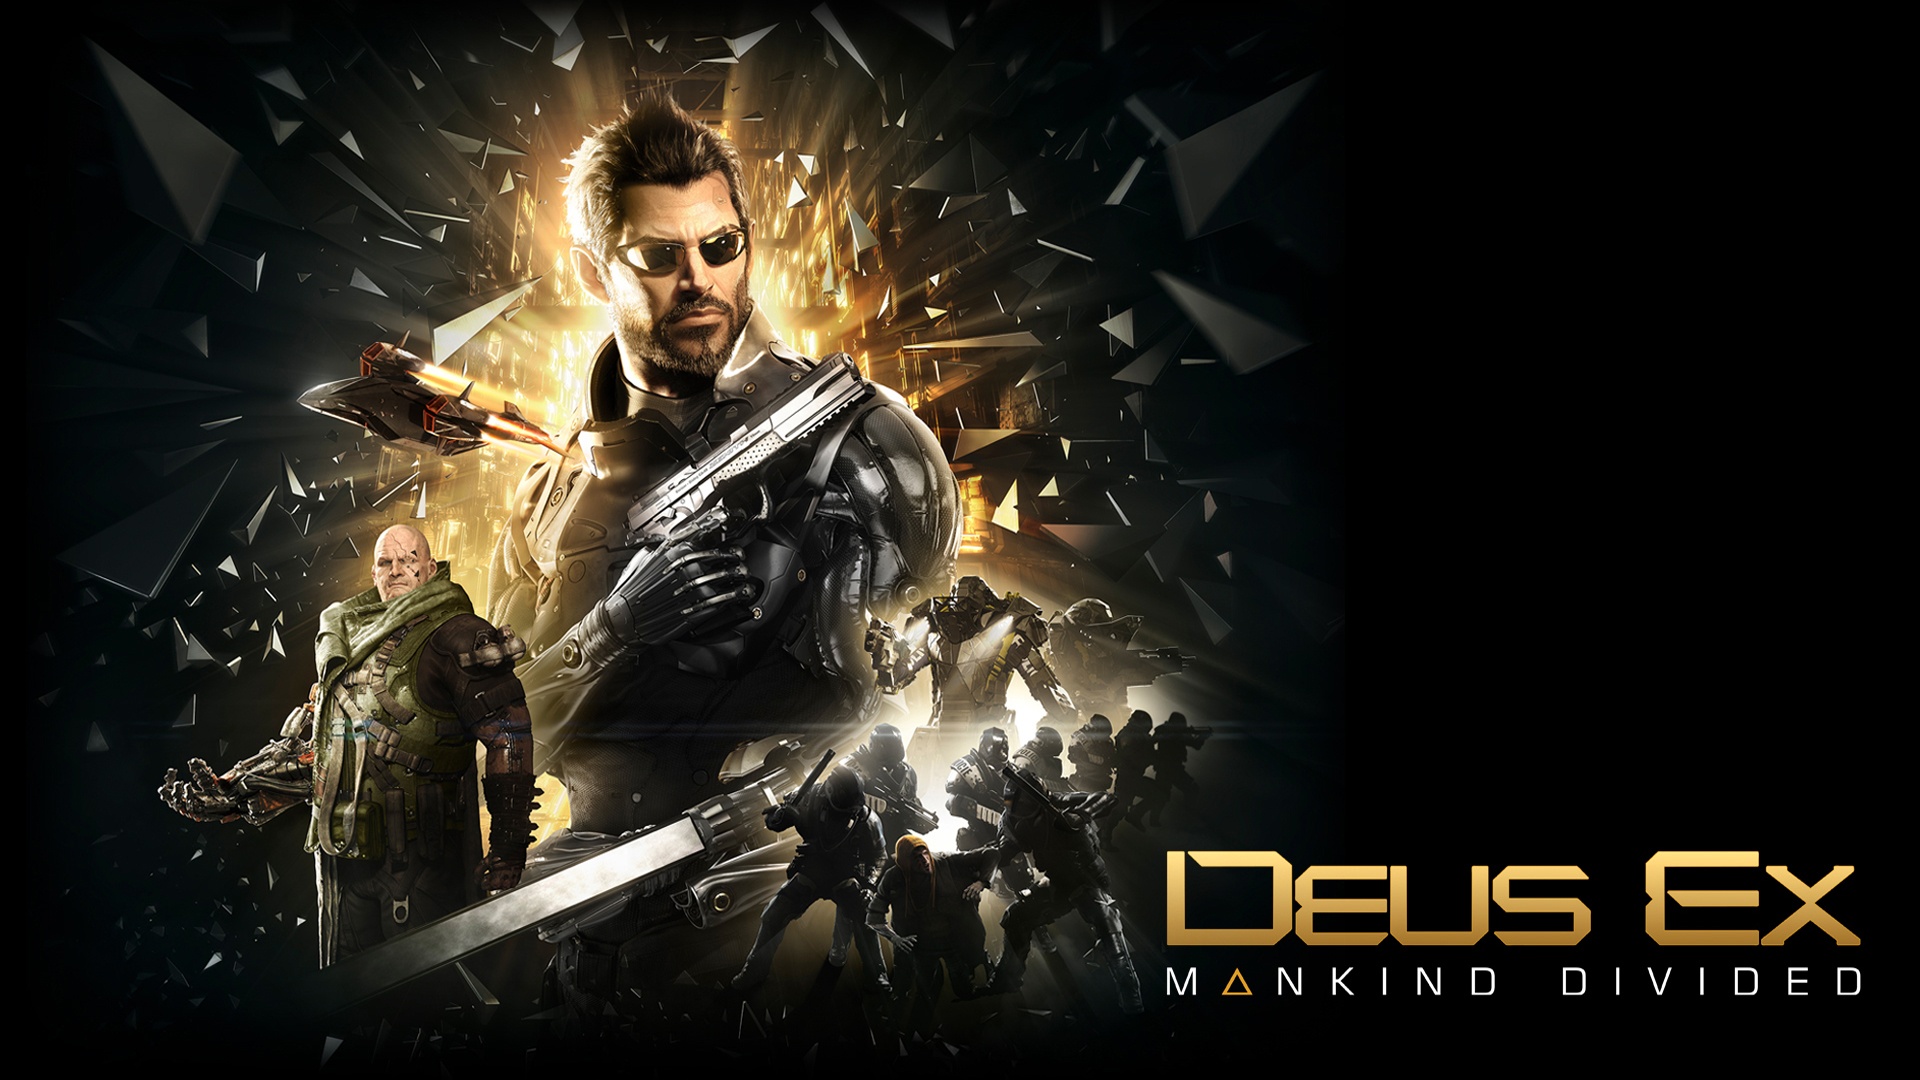 Deus-Ex-Mankind-Divided-Wallpaper-HD